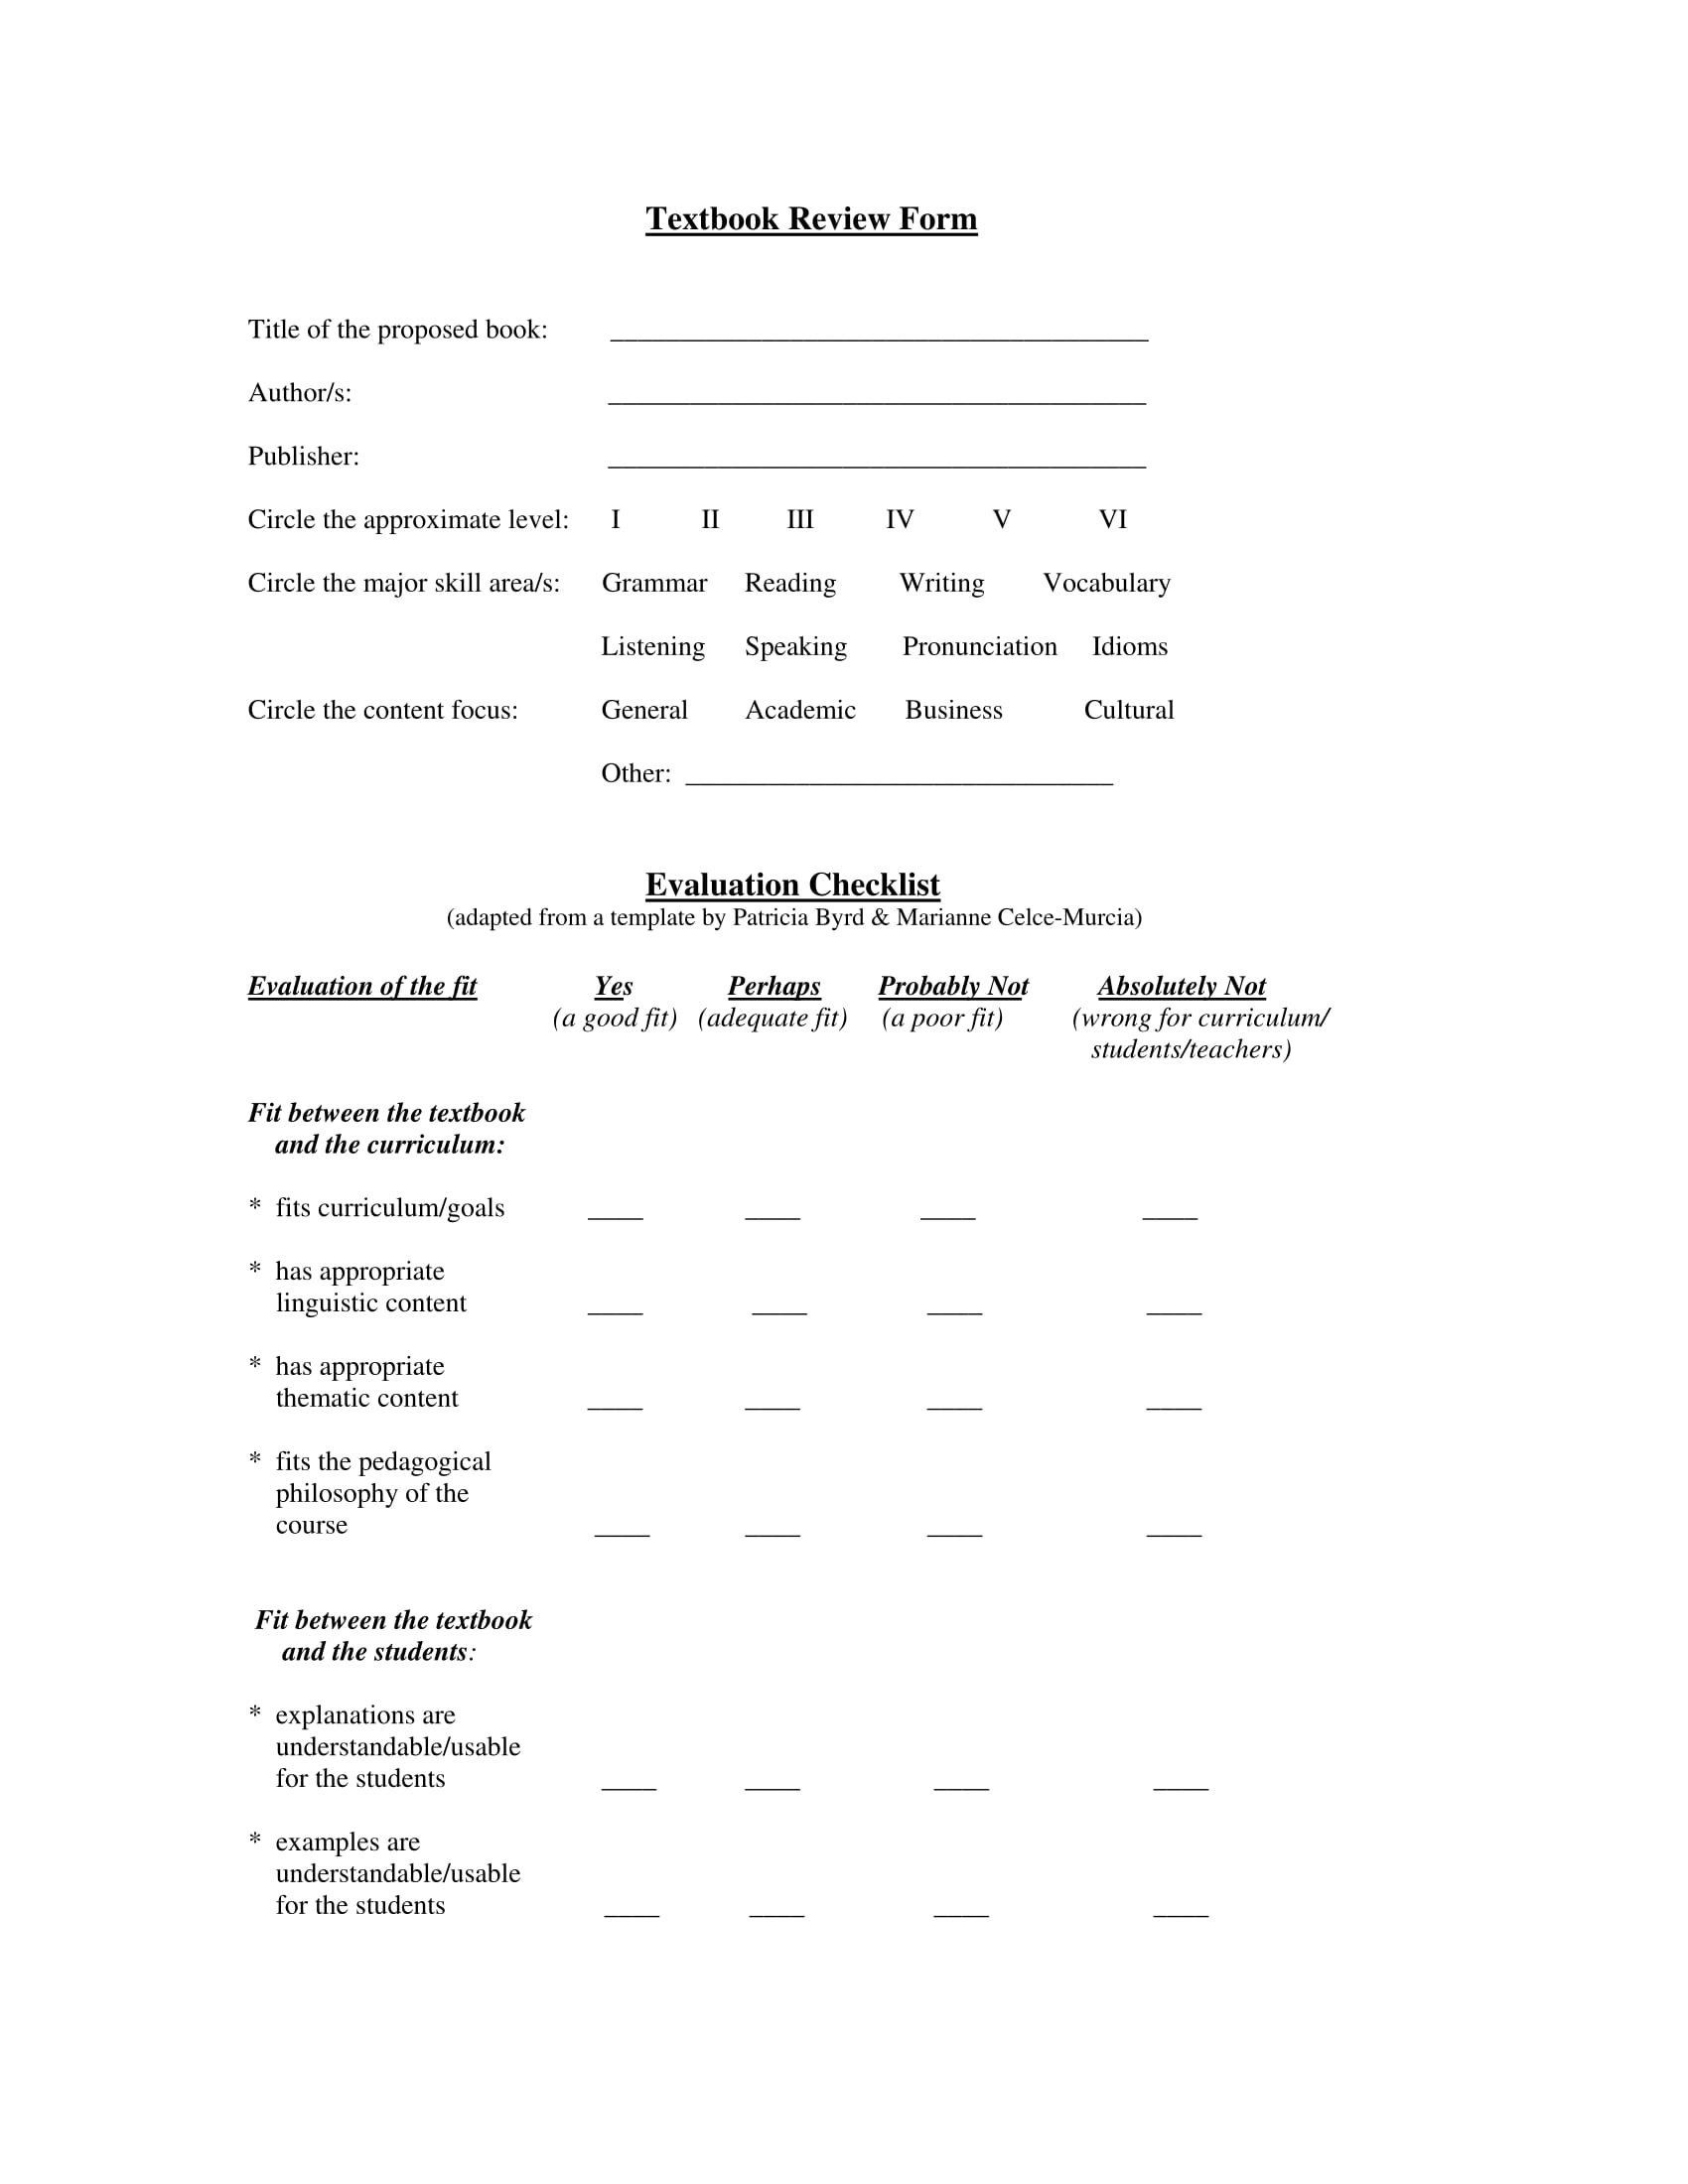 textbook evaluation checklist form 1